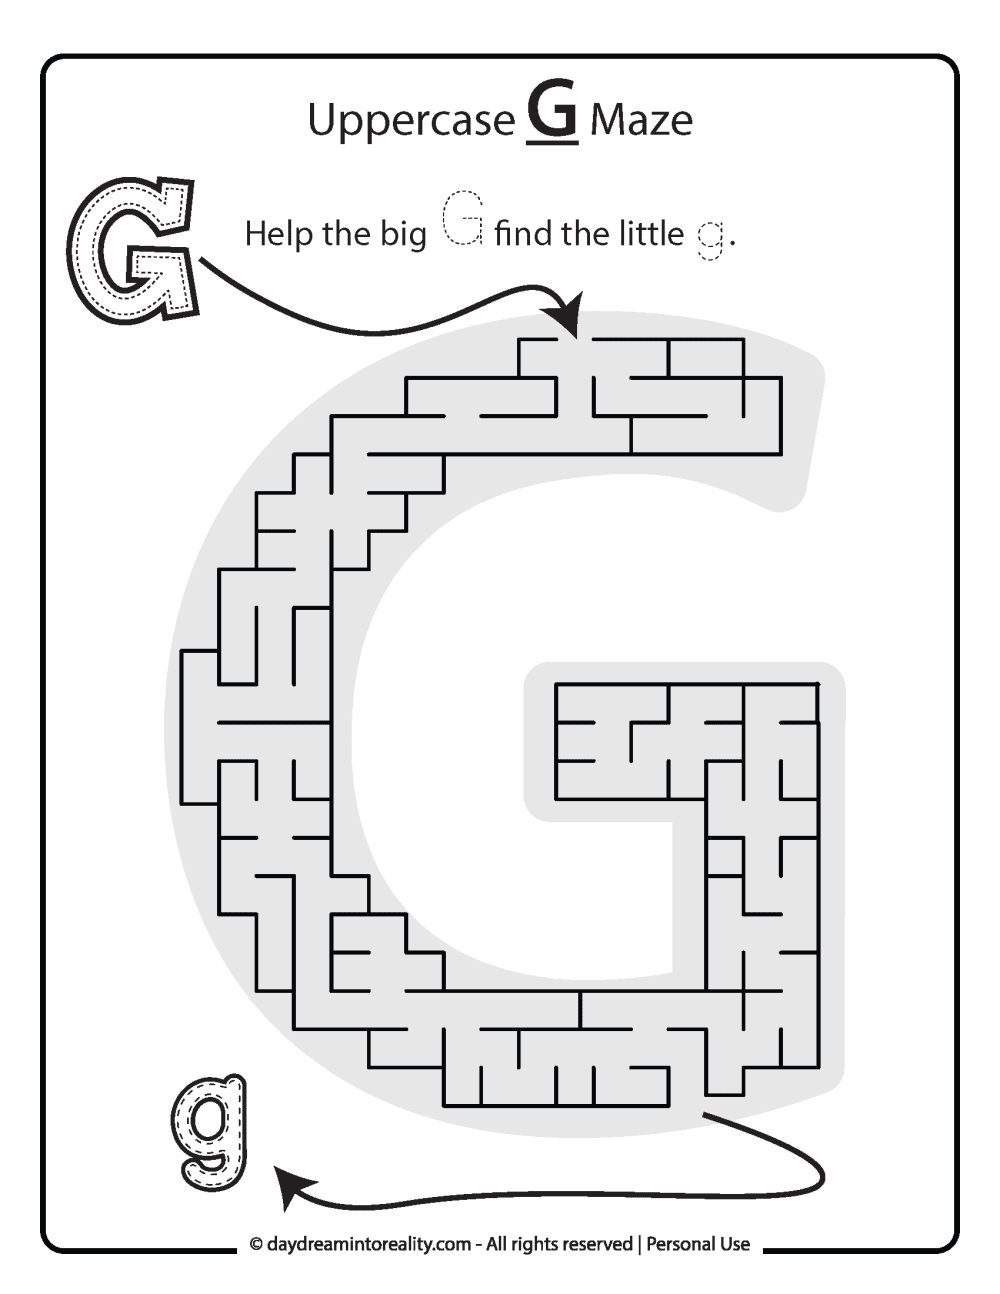 Uppercase "G" Maze Free Printable